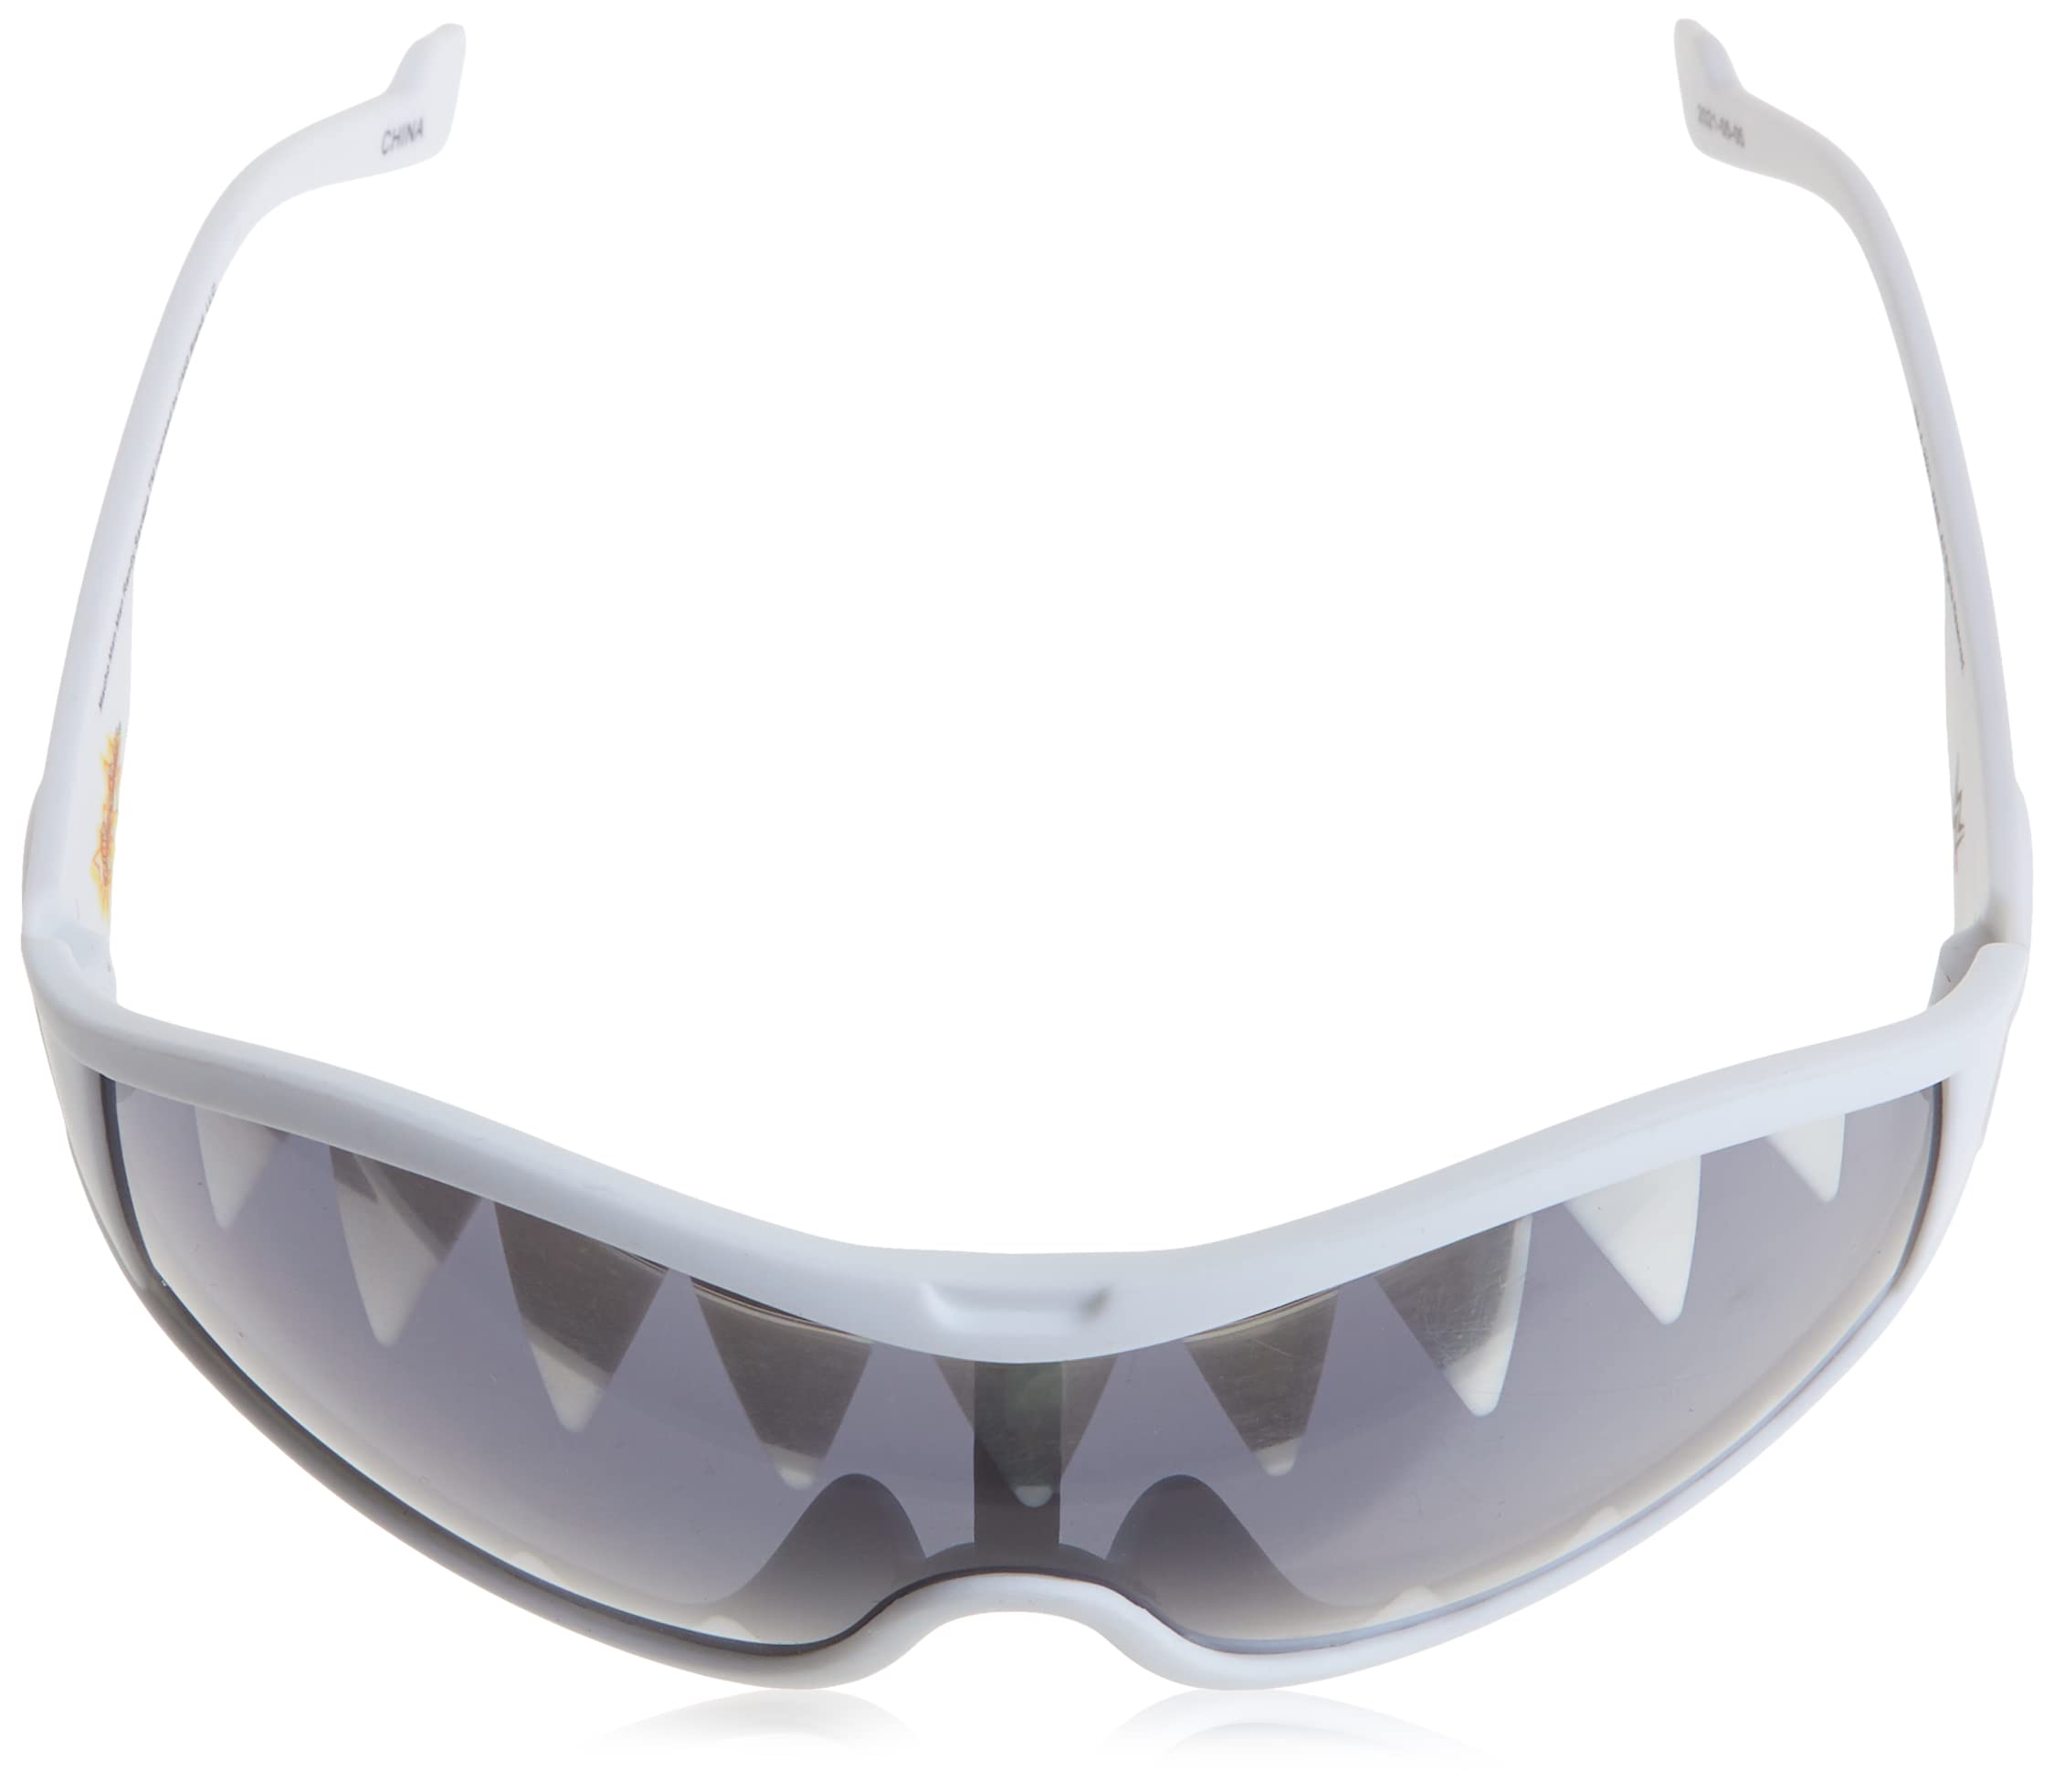 WWE Macho Man Sunglasses Teeth